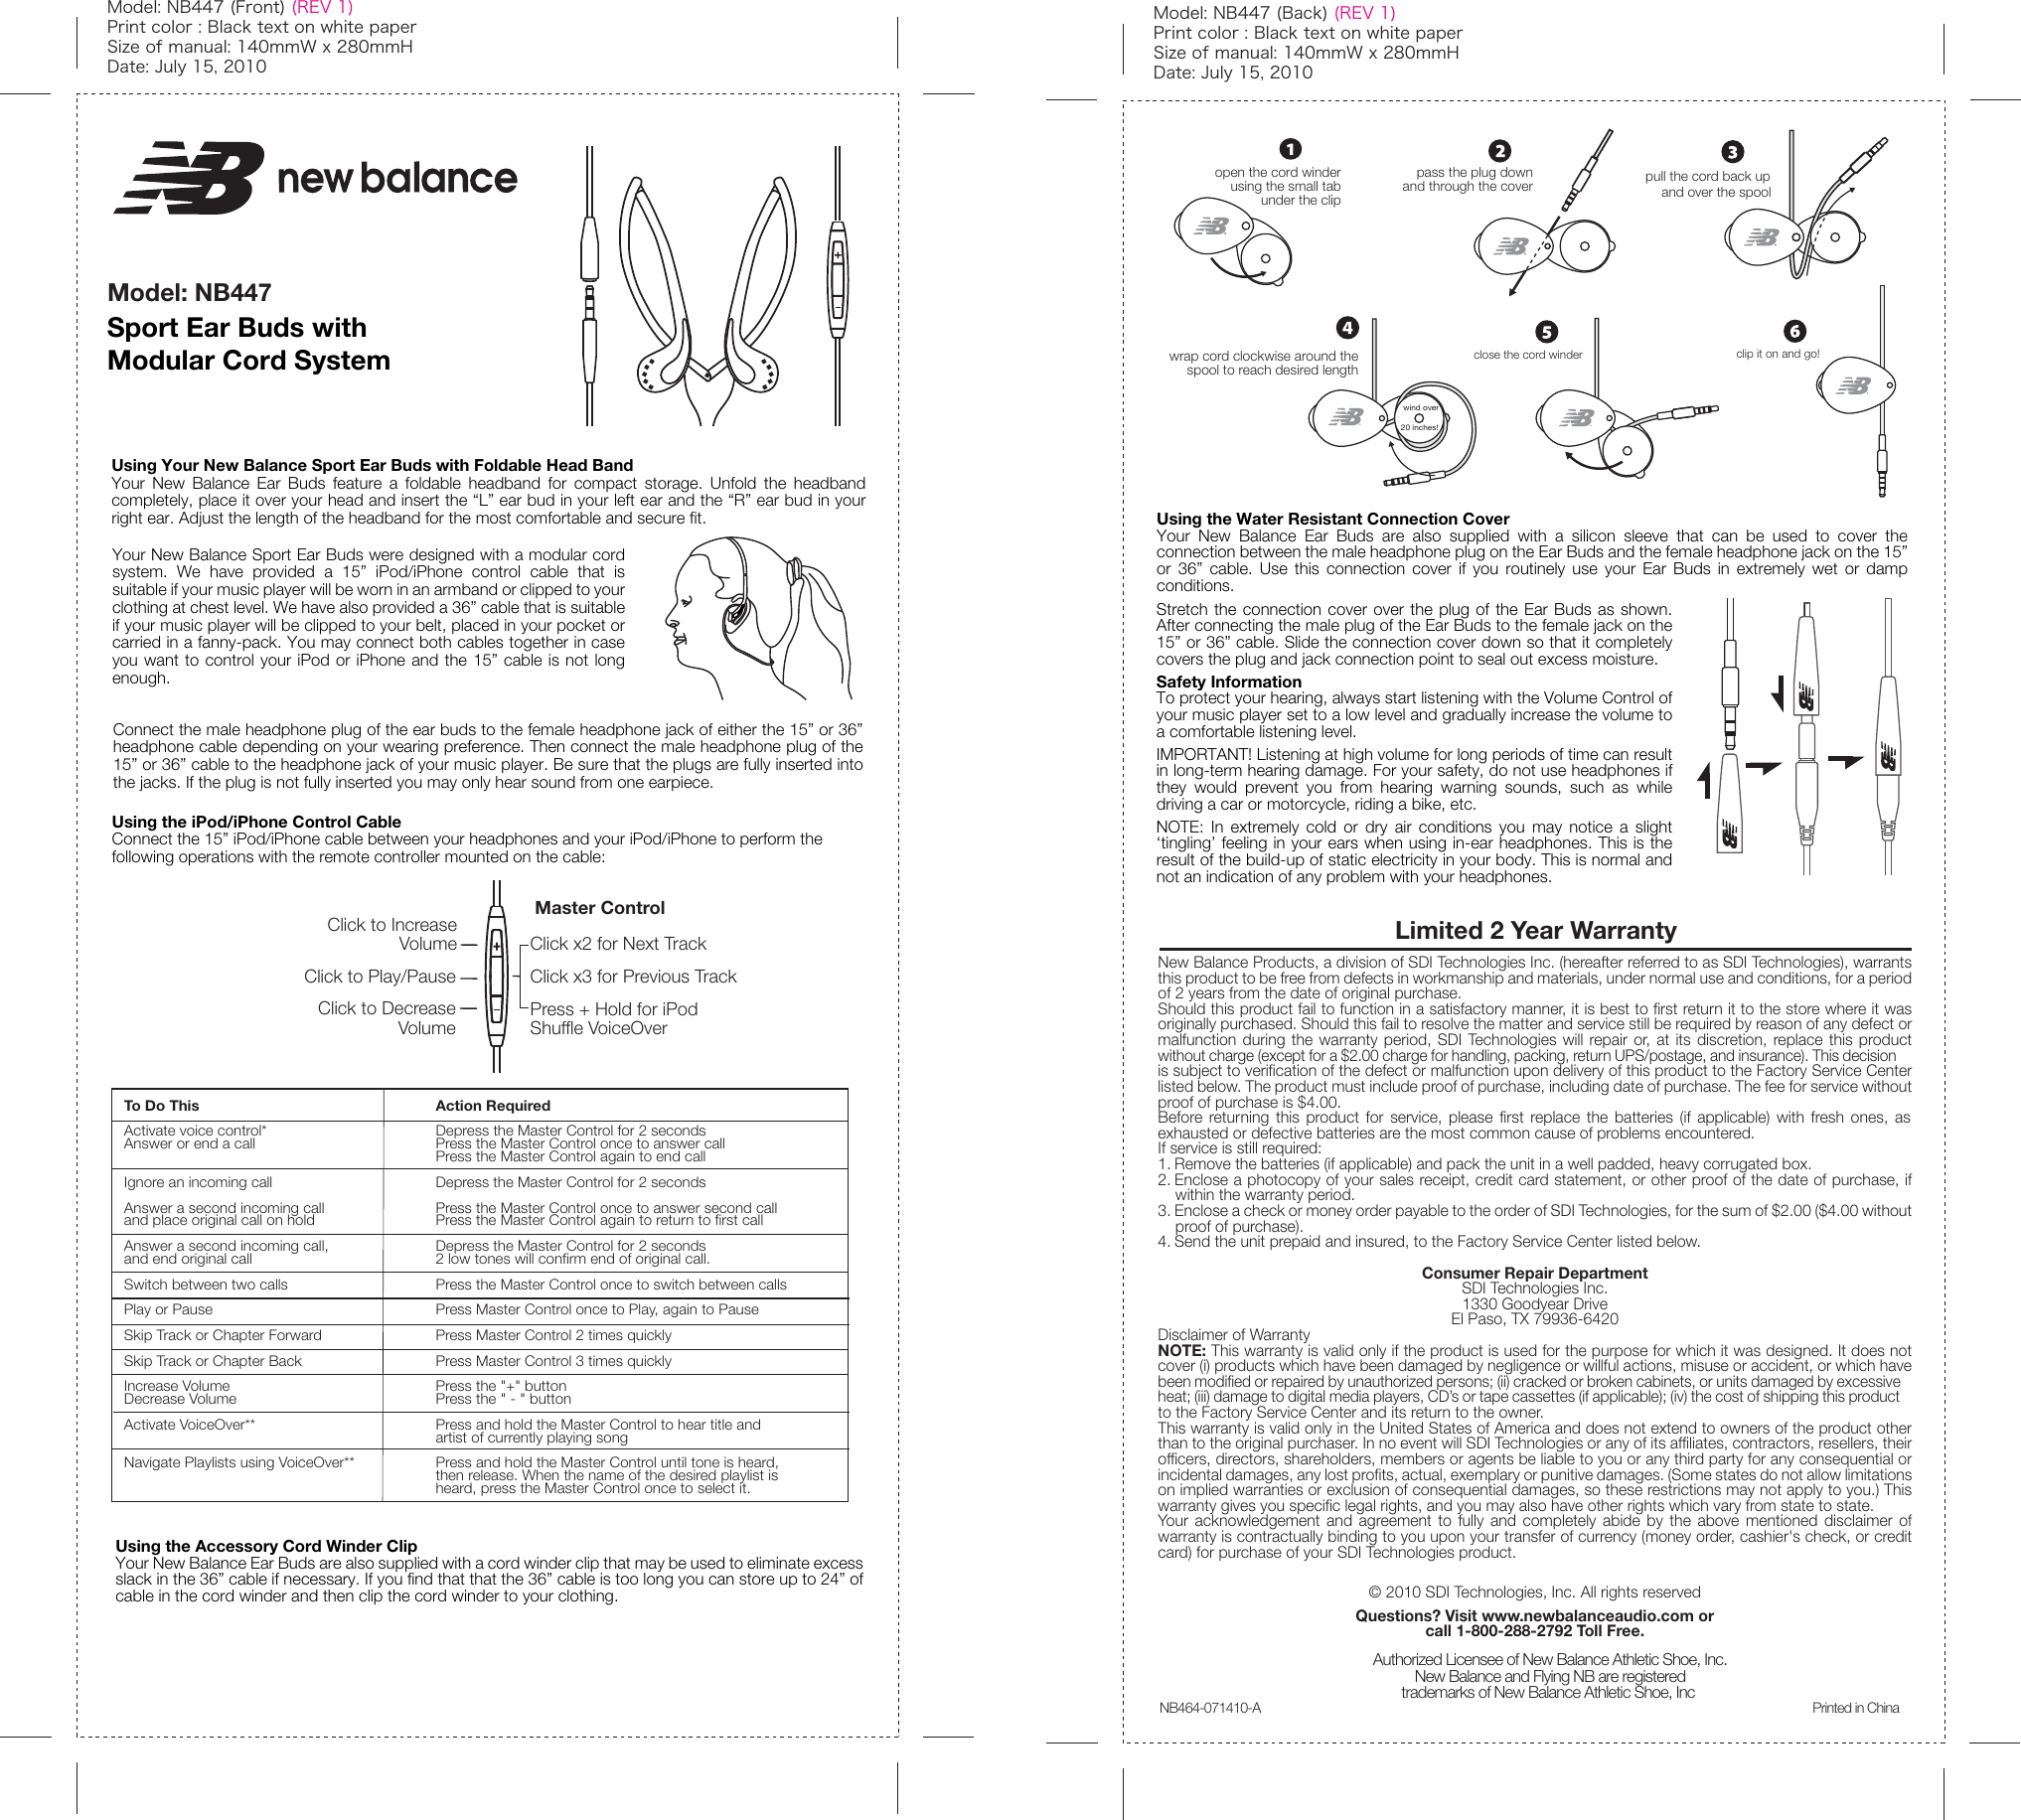 Page 2 of 2 - New-Balance New-Balance-Sport-Ear-Buds-Nb447-Users-Manual- NB447 IB (7-15-10)  New-balance-sport-ear-buds-nb447-users-manual